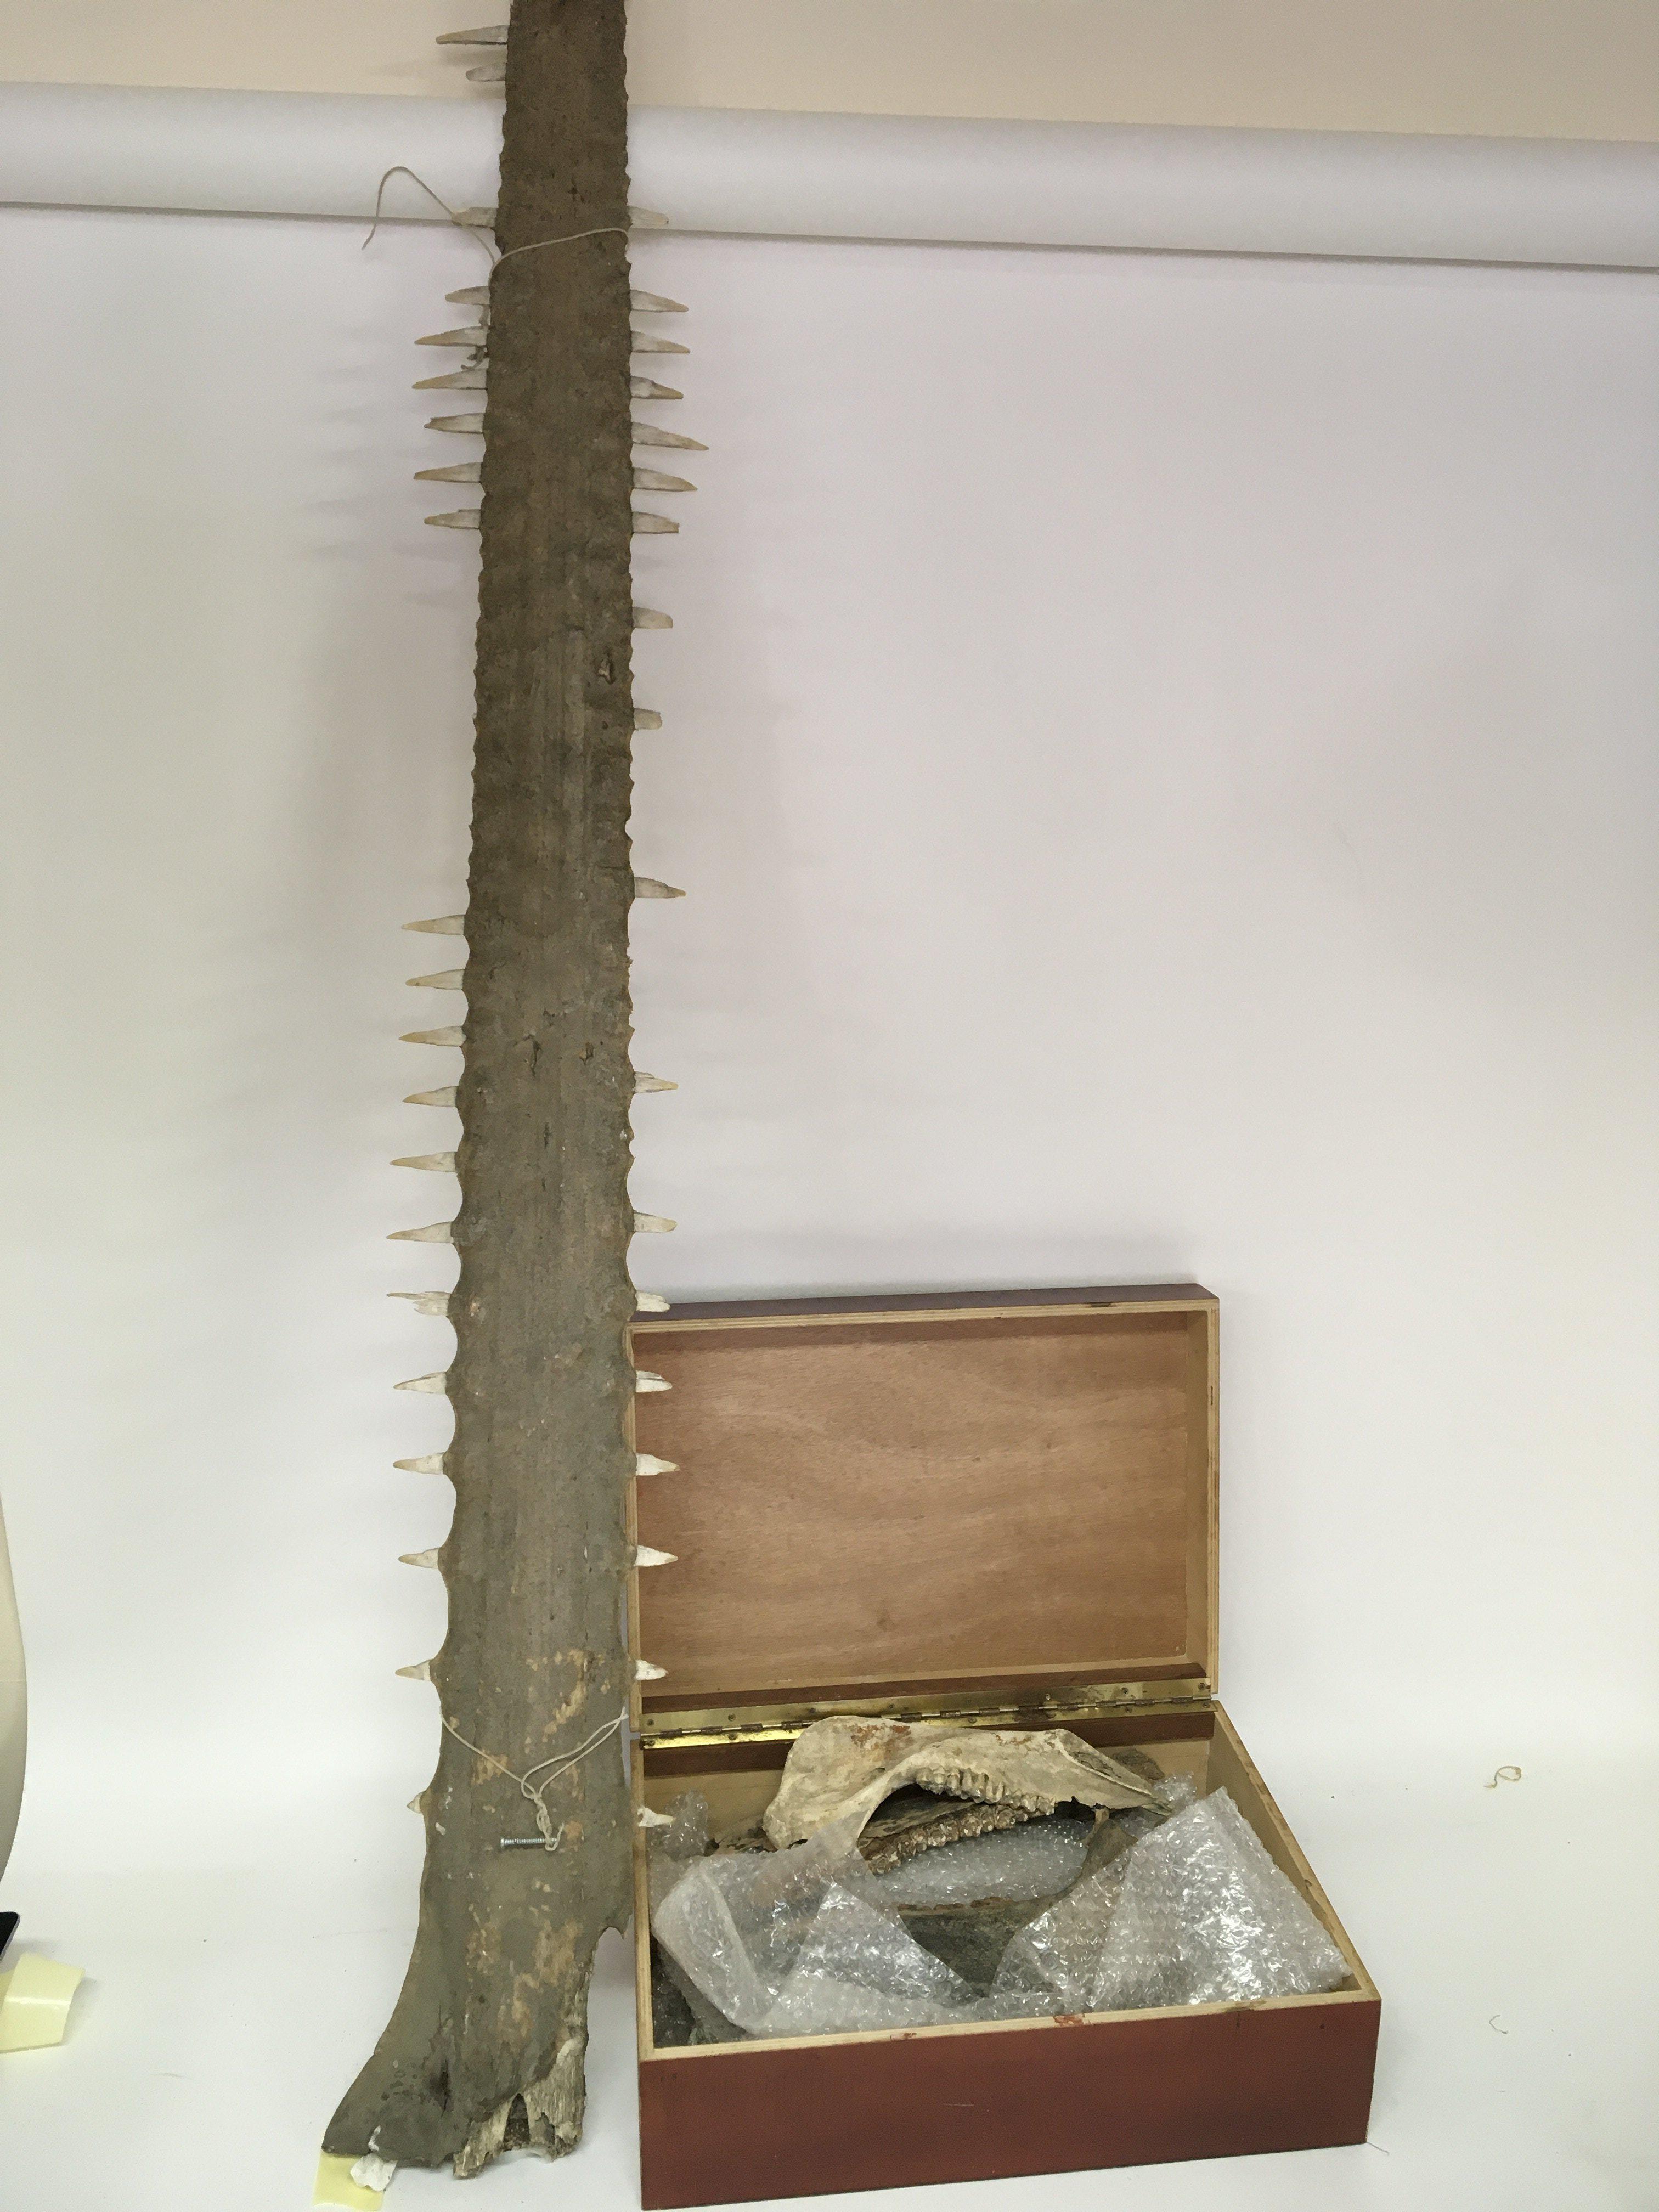 A Sawfish rostrum length 136cm and a box containin